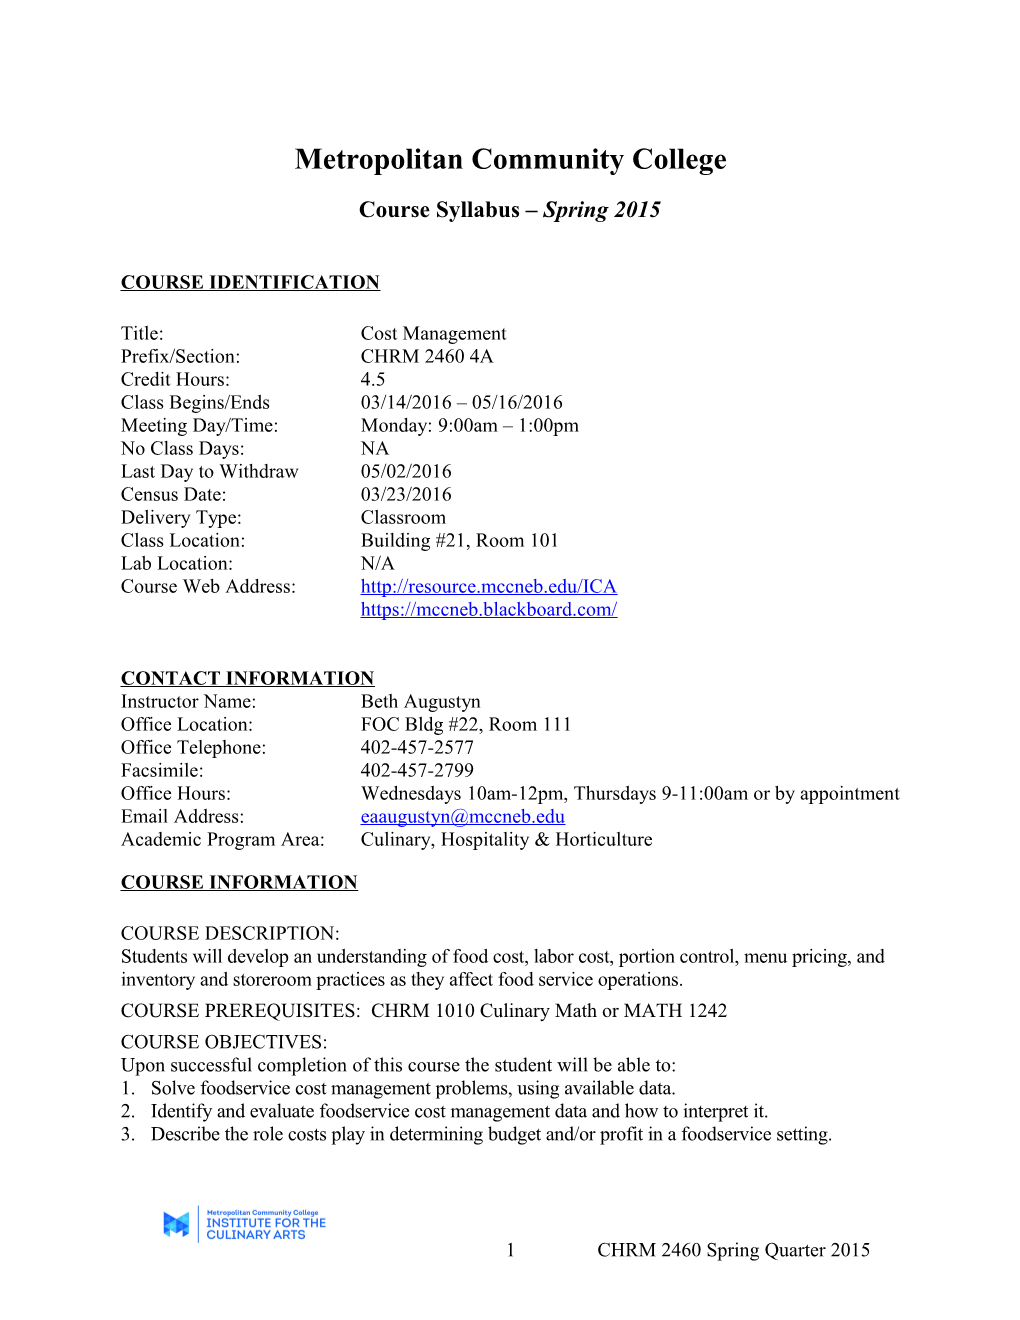 Metropolitan Community College s1